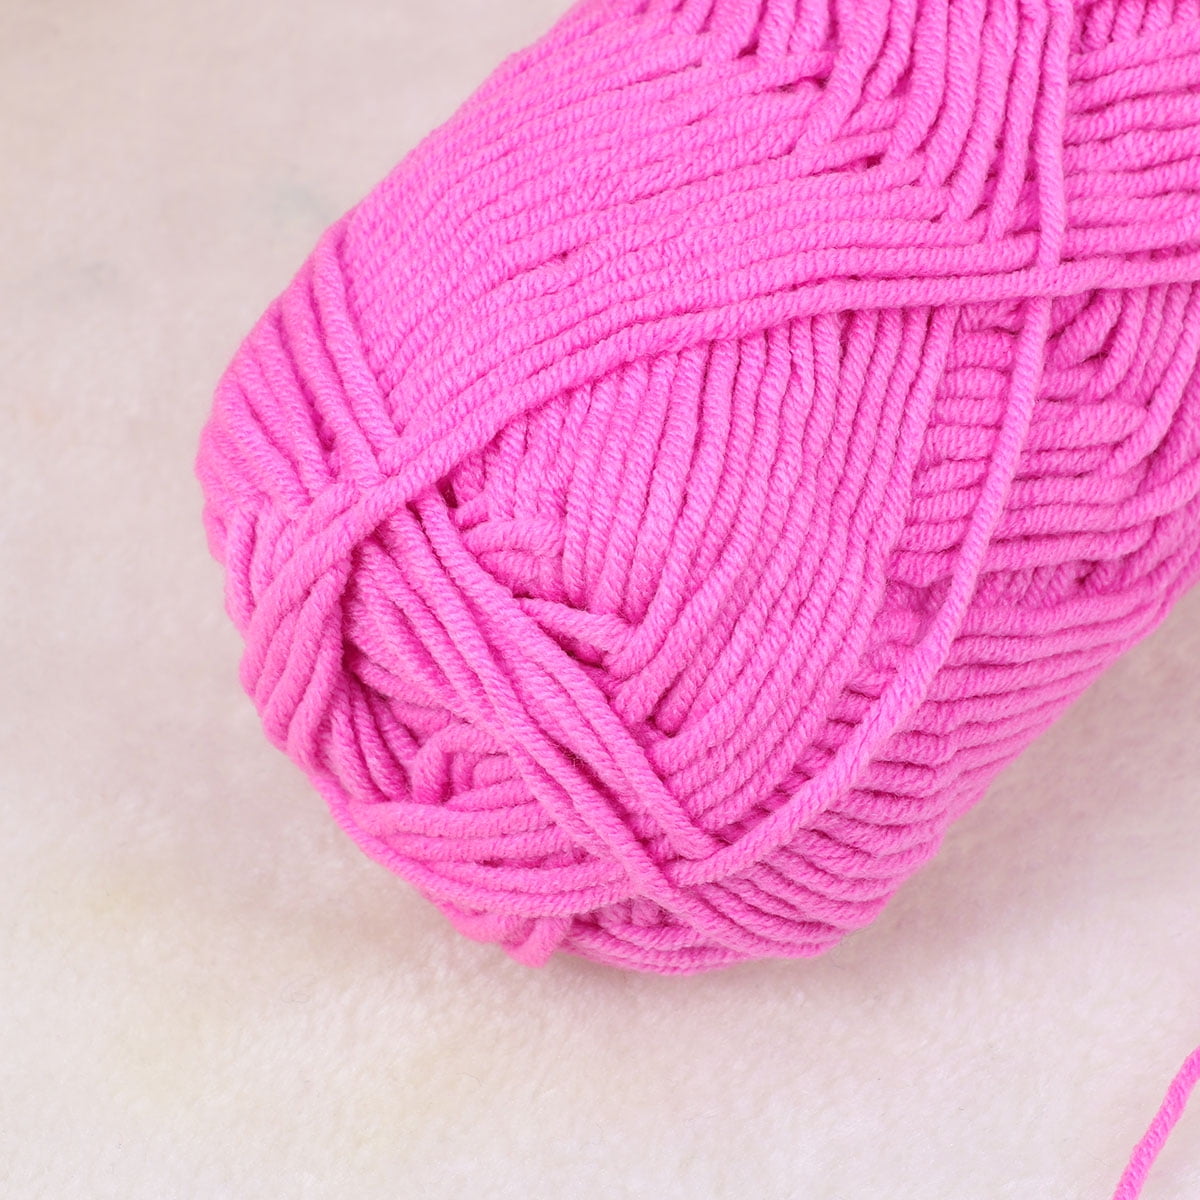 Uheoun Bulk Yarn Clearance Sale for Crocheting, 1PC 50g Chunky Colorful  Hand Knitting Baby Milk Cotton Crochet Knitwear Wool G